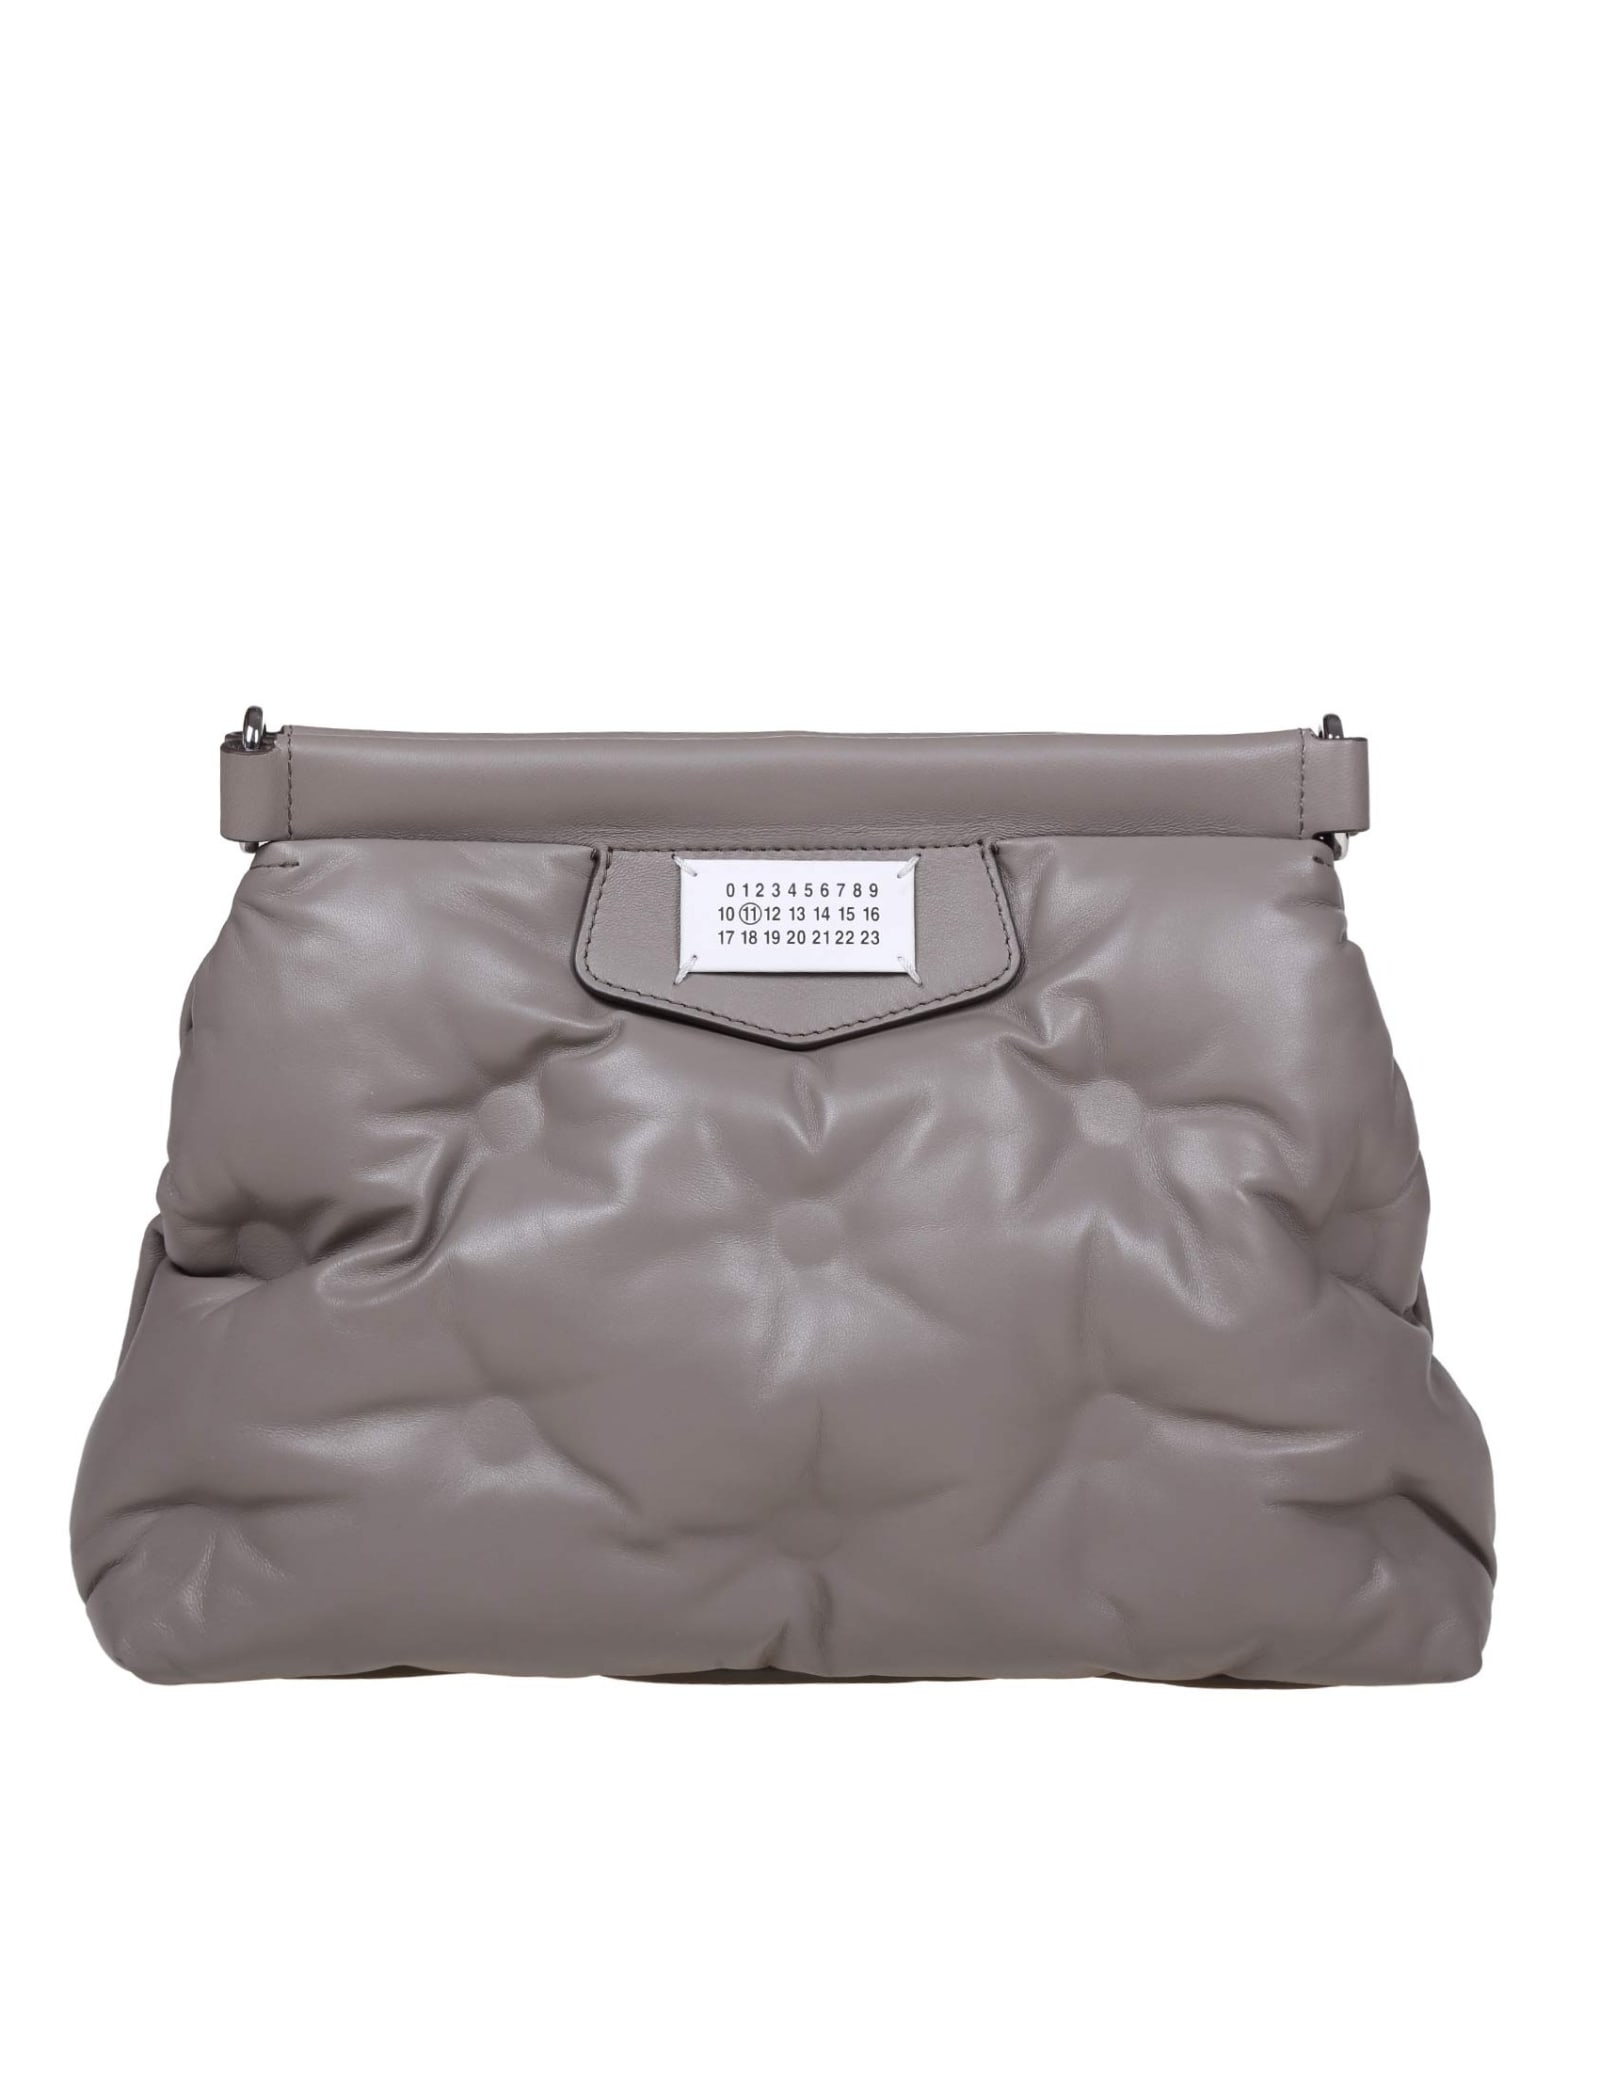 Shop Maison Margiela Shoulder Bag In Matelasse Leather Gray Color In Calce